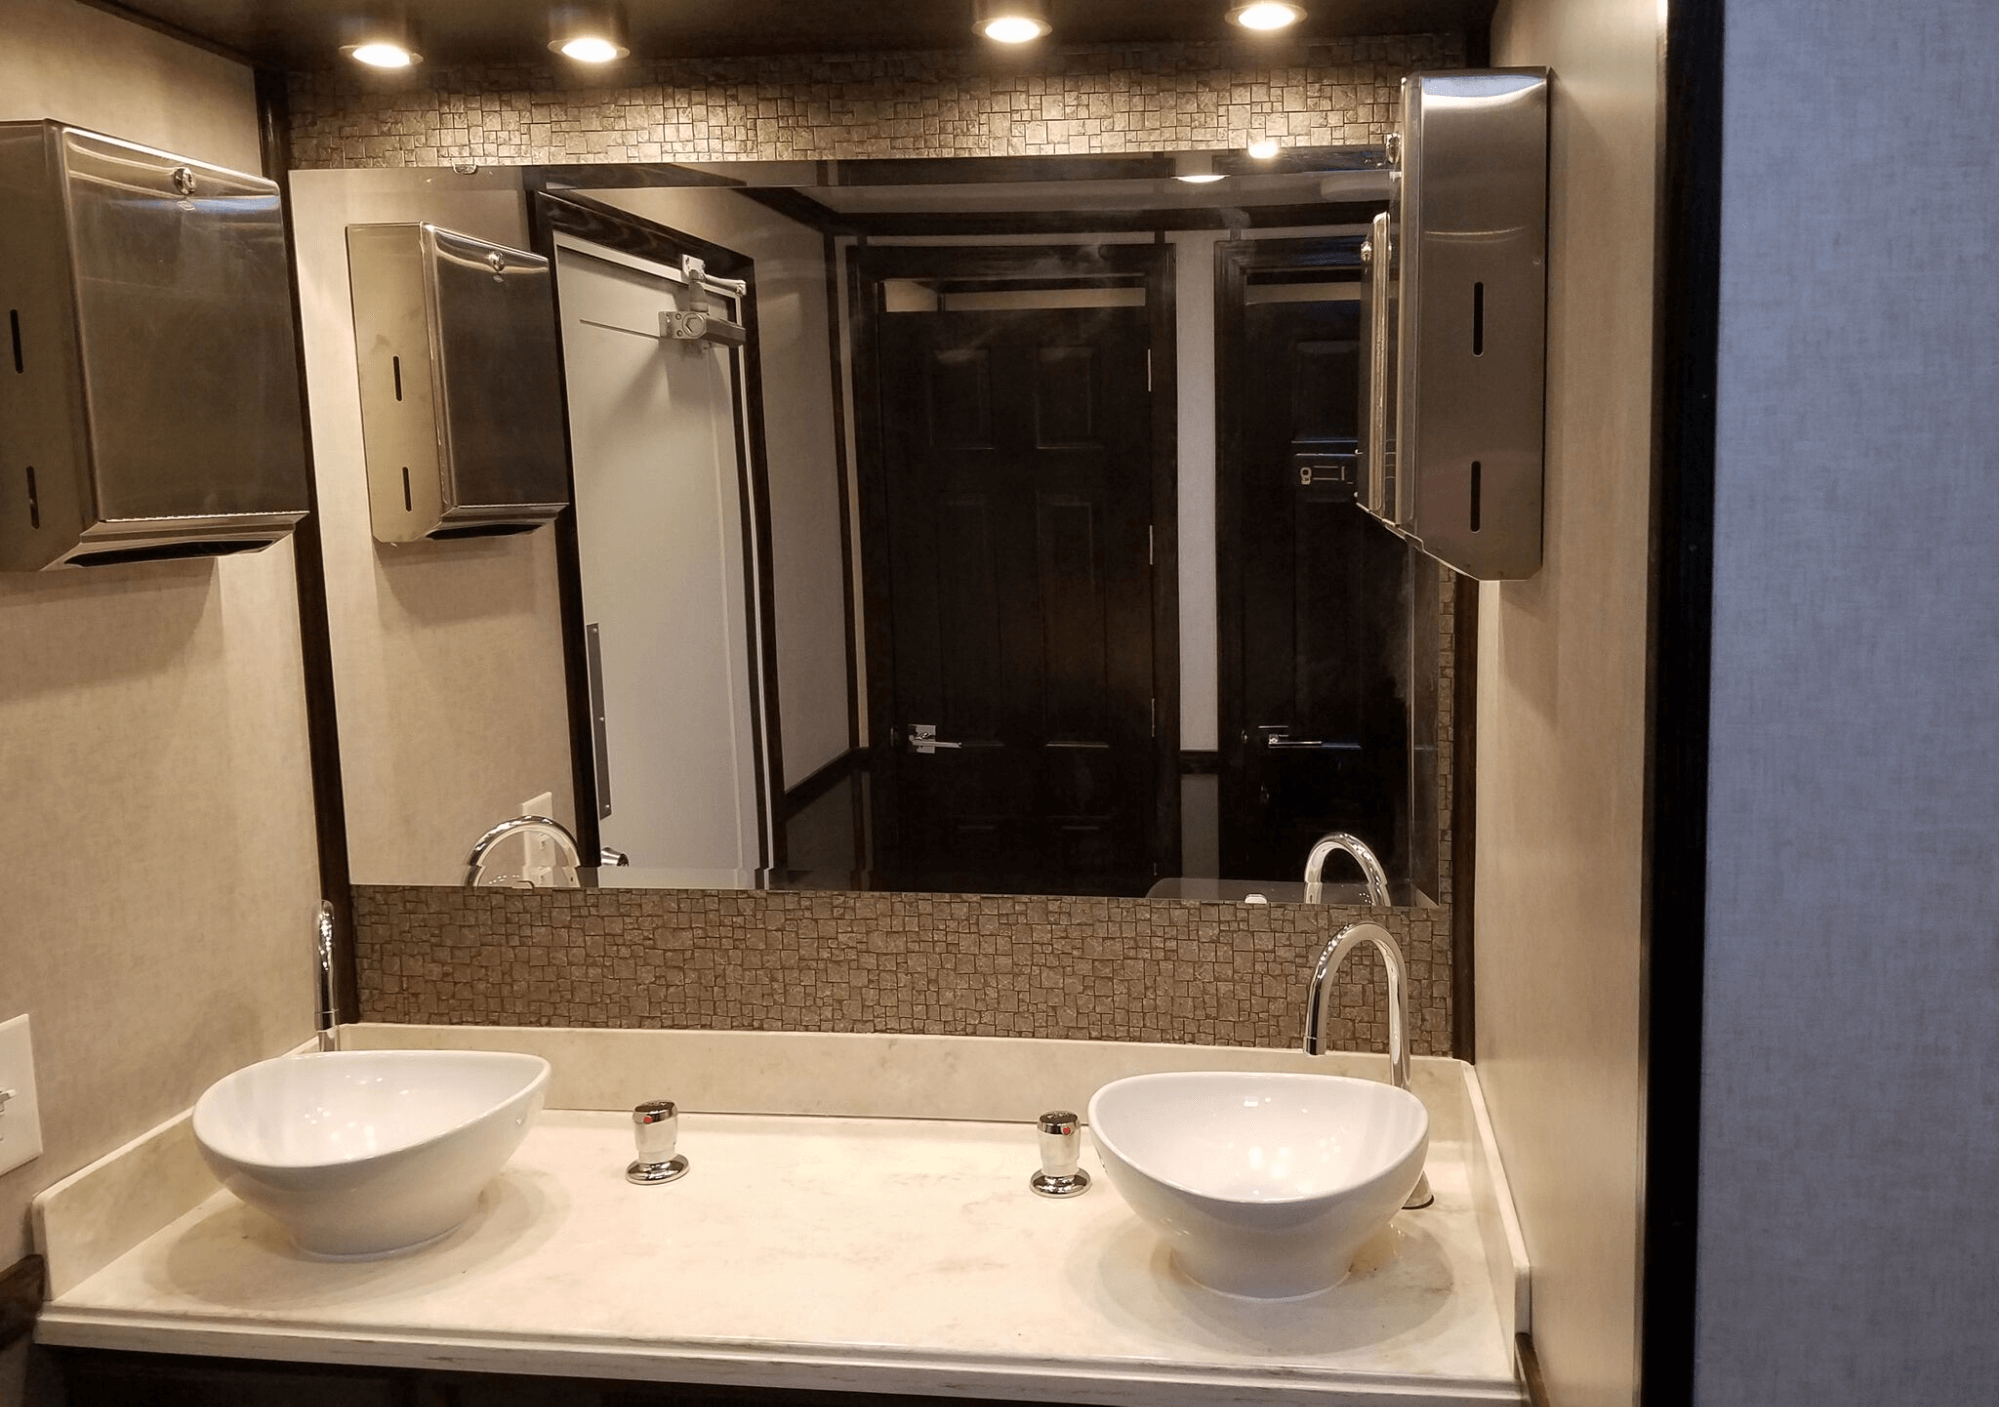 Interior of a portable toilet restroom trailer